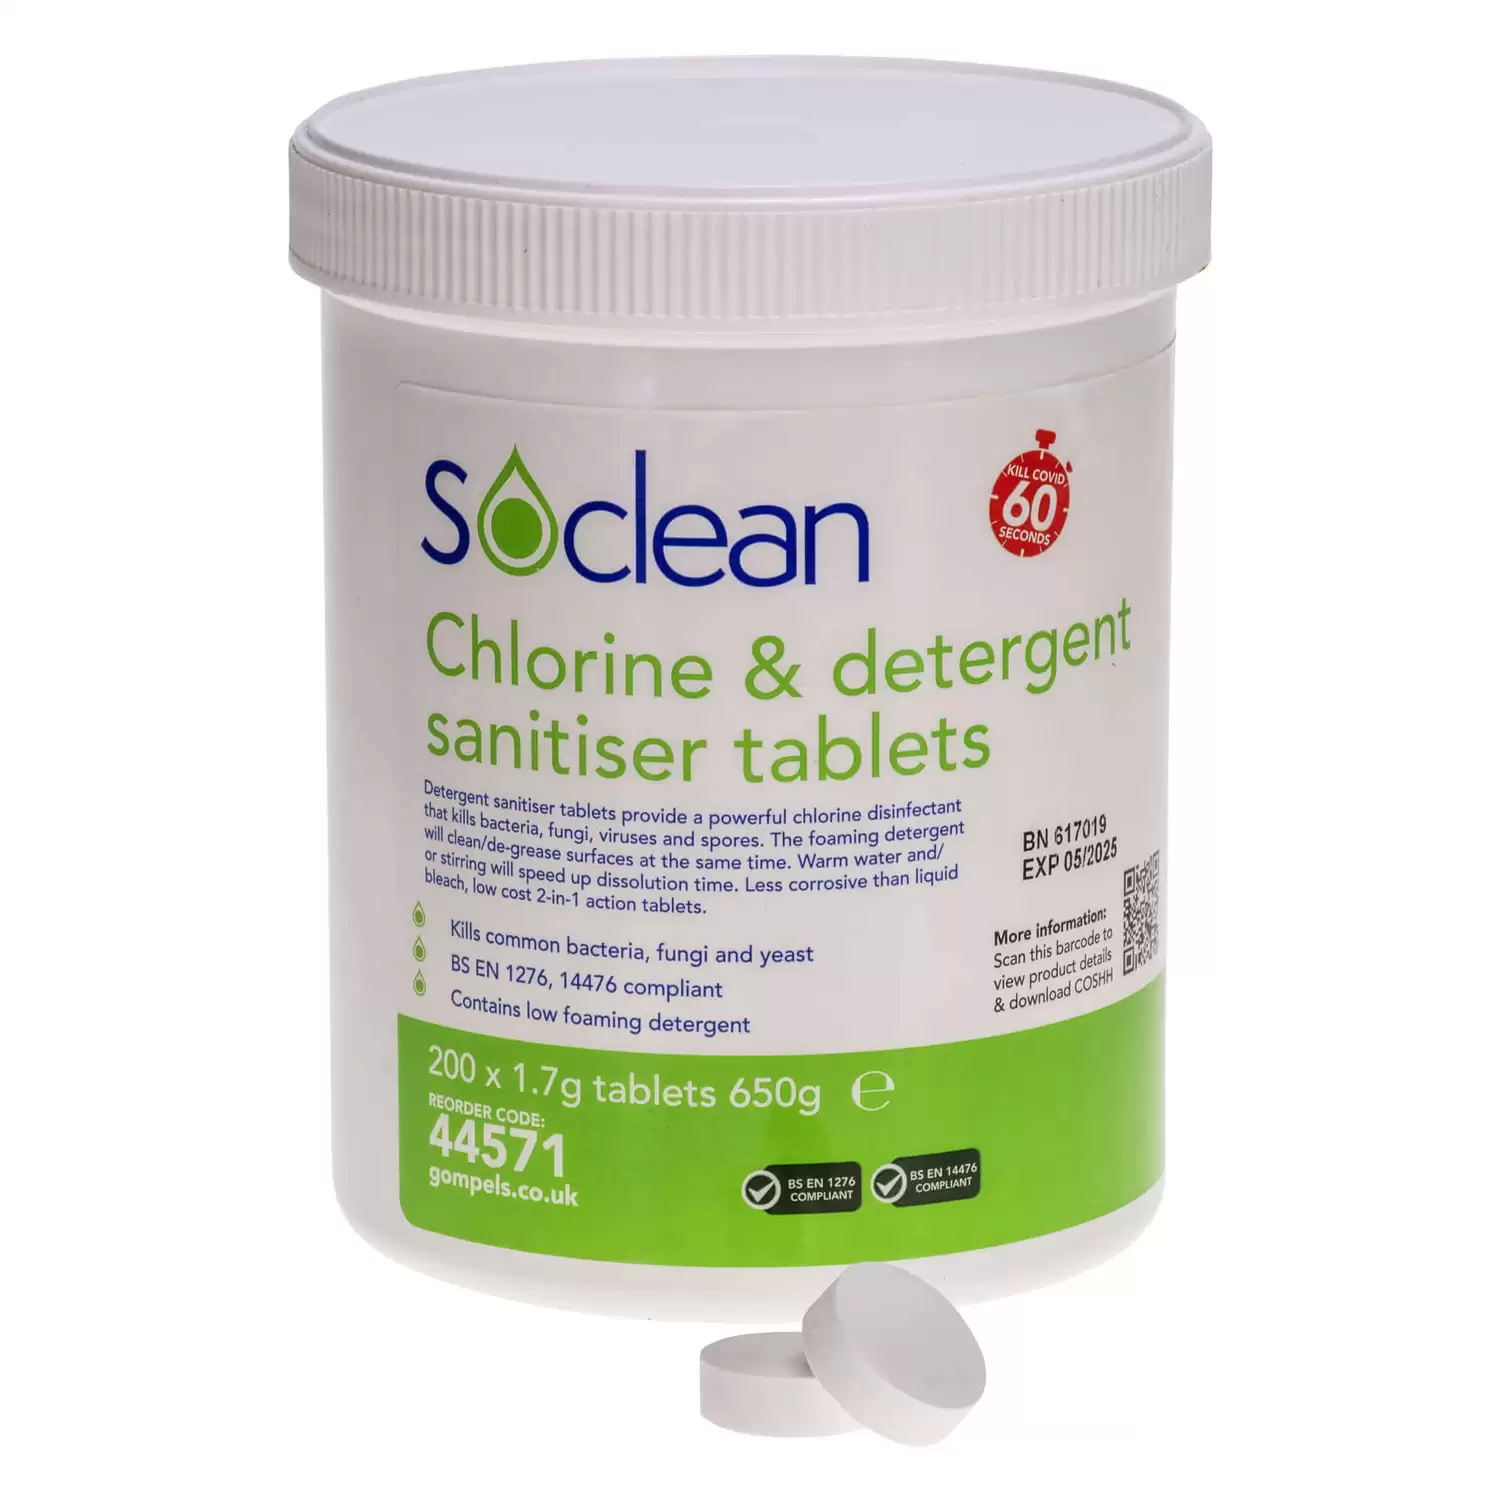 Soclean Chlorine Tablets With Detergent Sanitiser 200 Pack